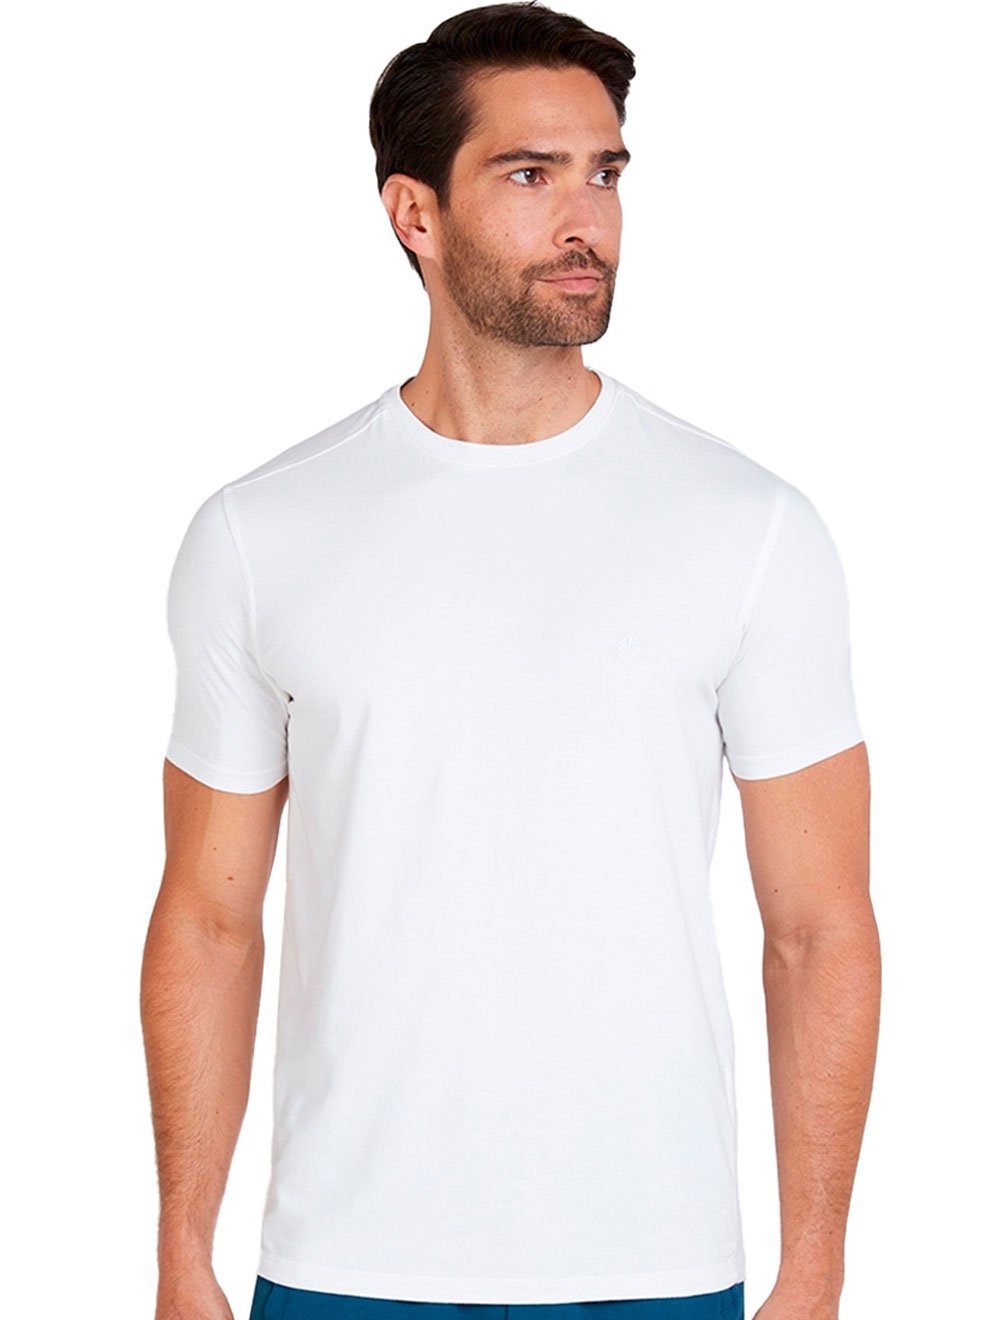 Camiseta Dudalina Masculina Regular White Icon Branca